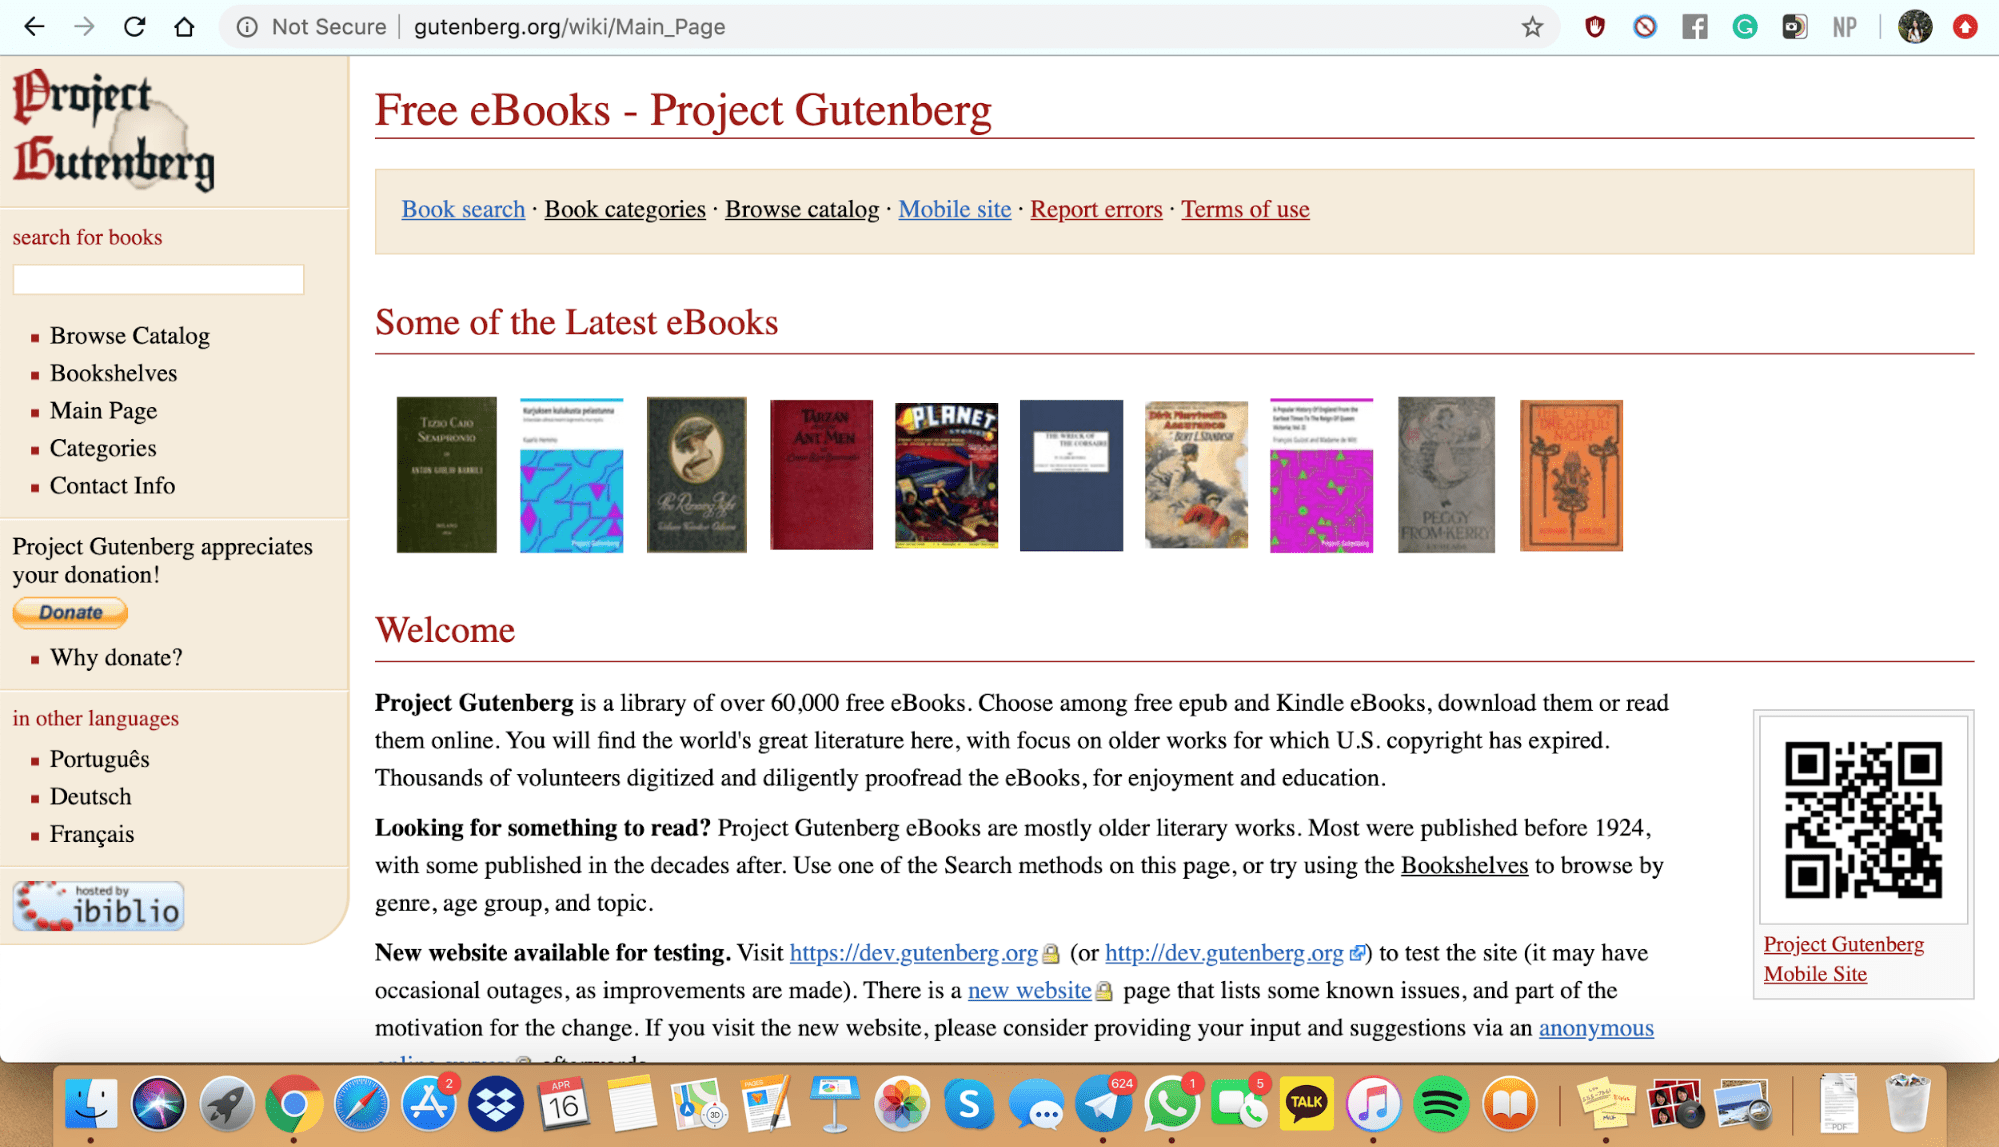 Free online books: Project Gutenberg